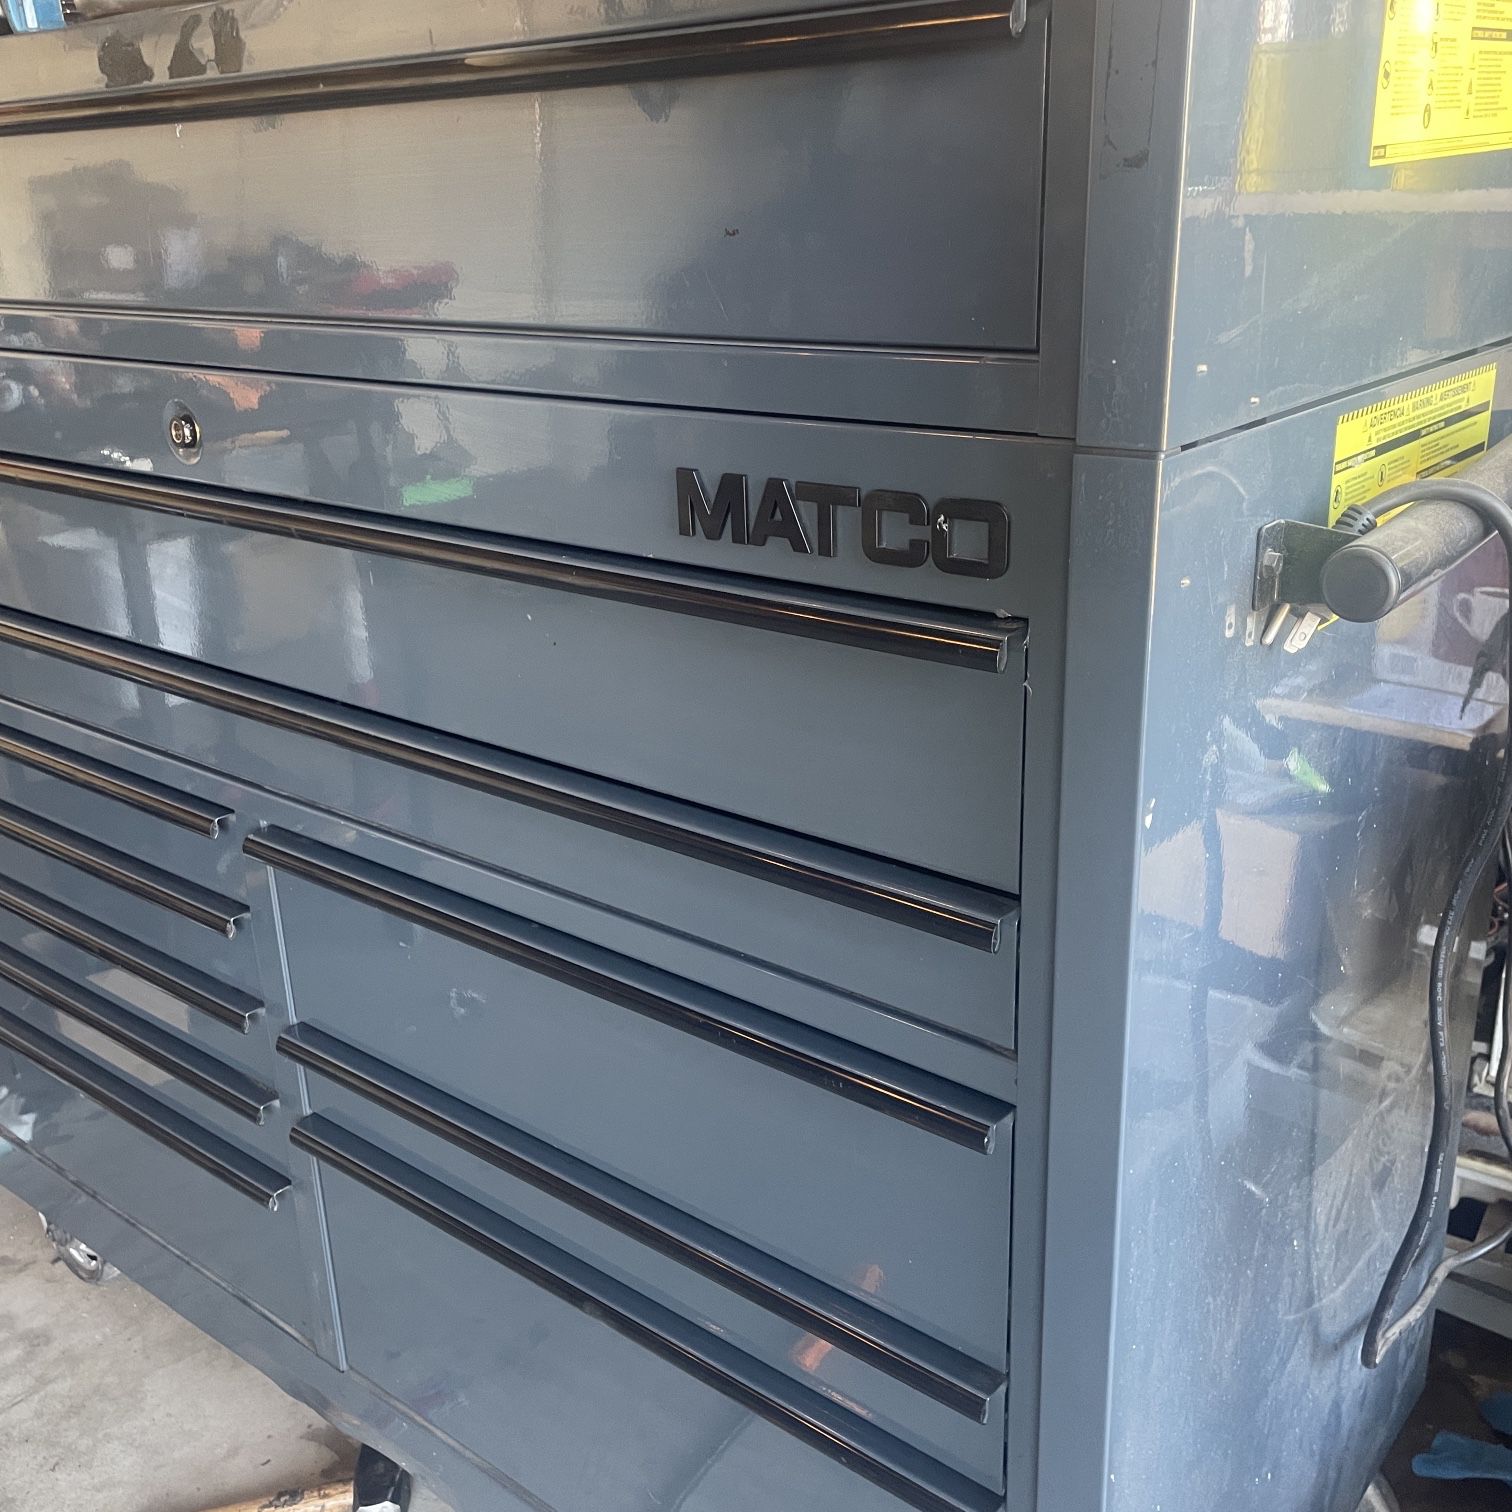 Matco 4S Tool Box With Power Bank